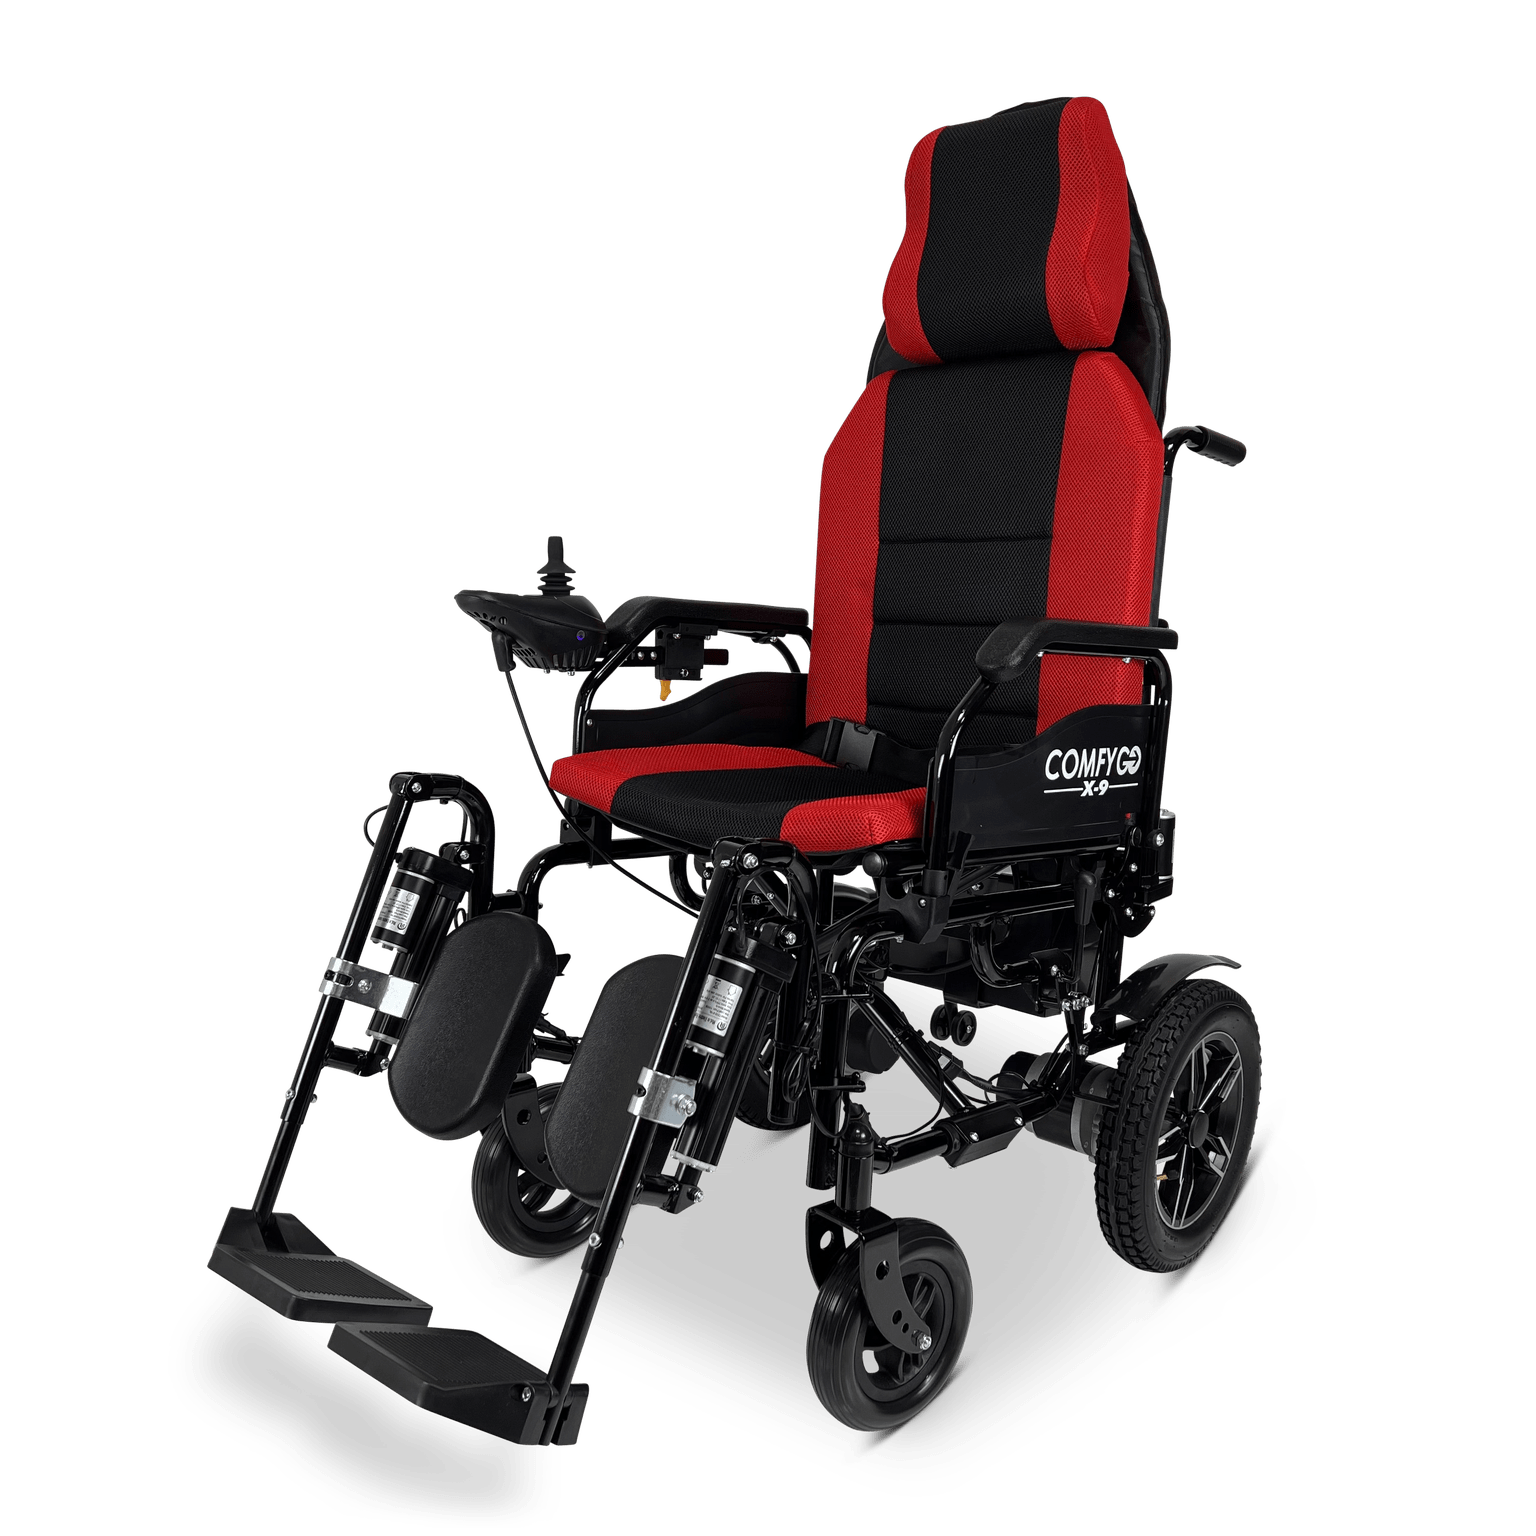 COMFYGO Power Wheelchair Red ComfyGo X-9 Remote Controlled Electric Wheelchair With Automatic Recline - CGX9RCEWAR